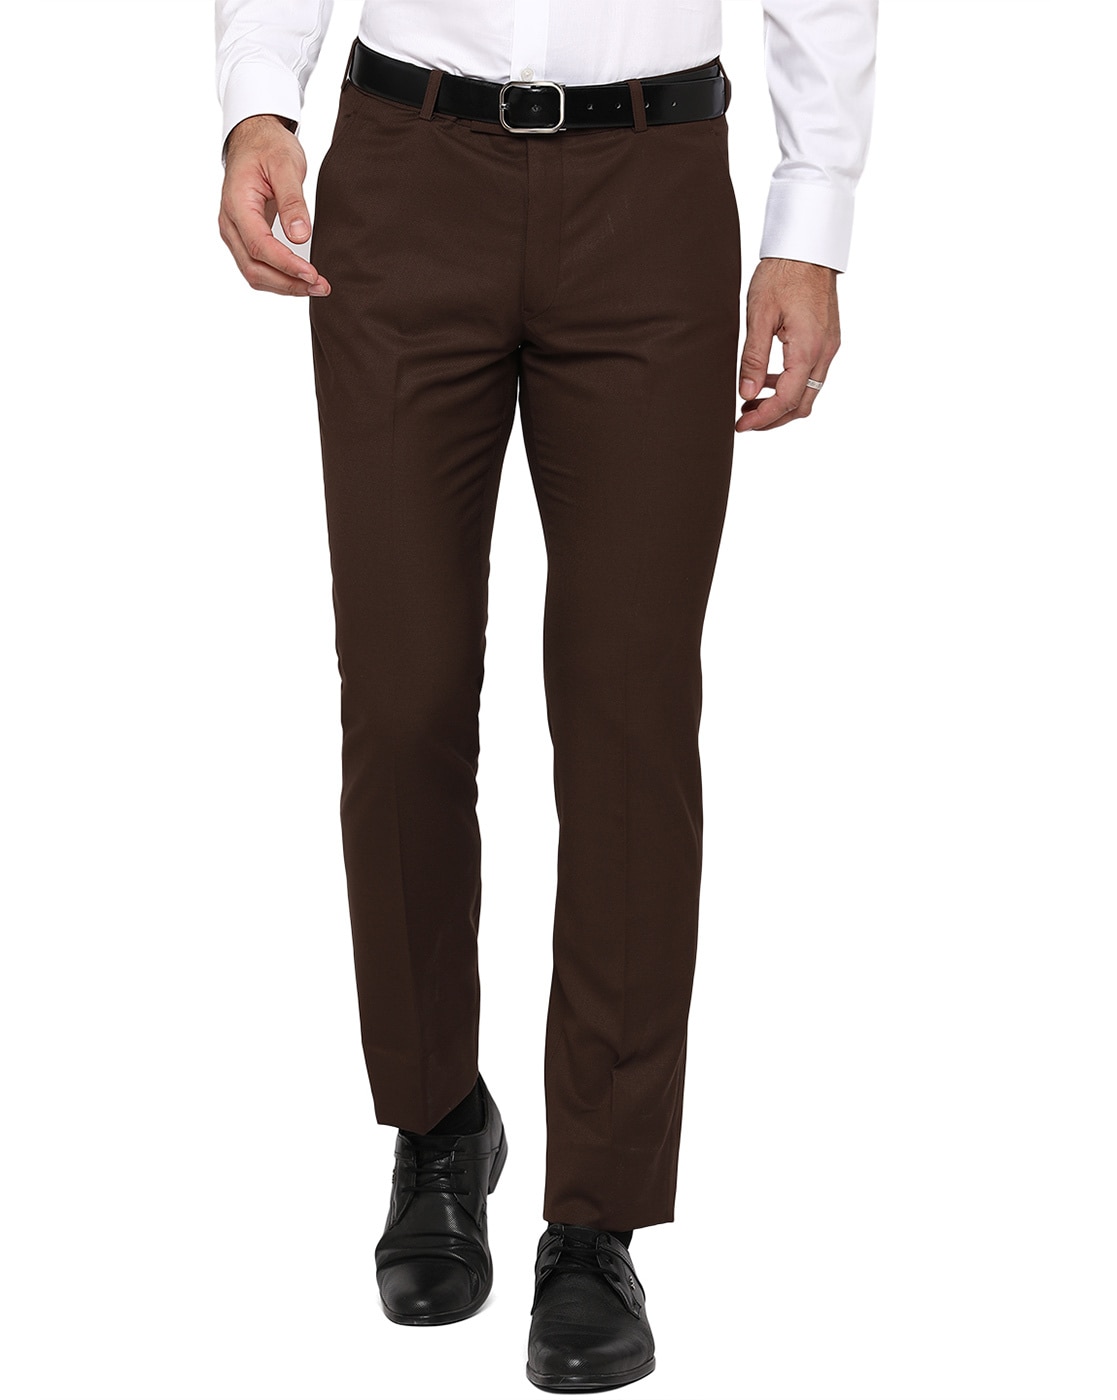 Buy Black & Grey Trousers & Pants for Men by SOLEMIO Online | Ajio.com